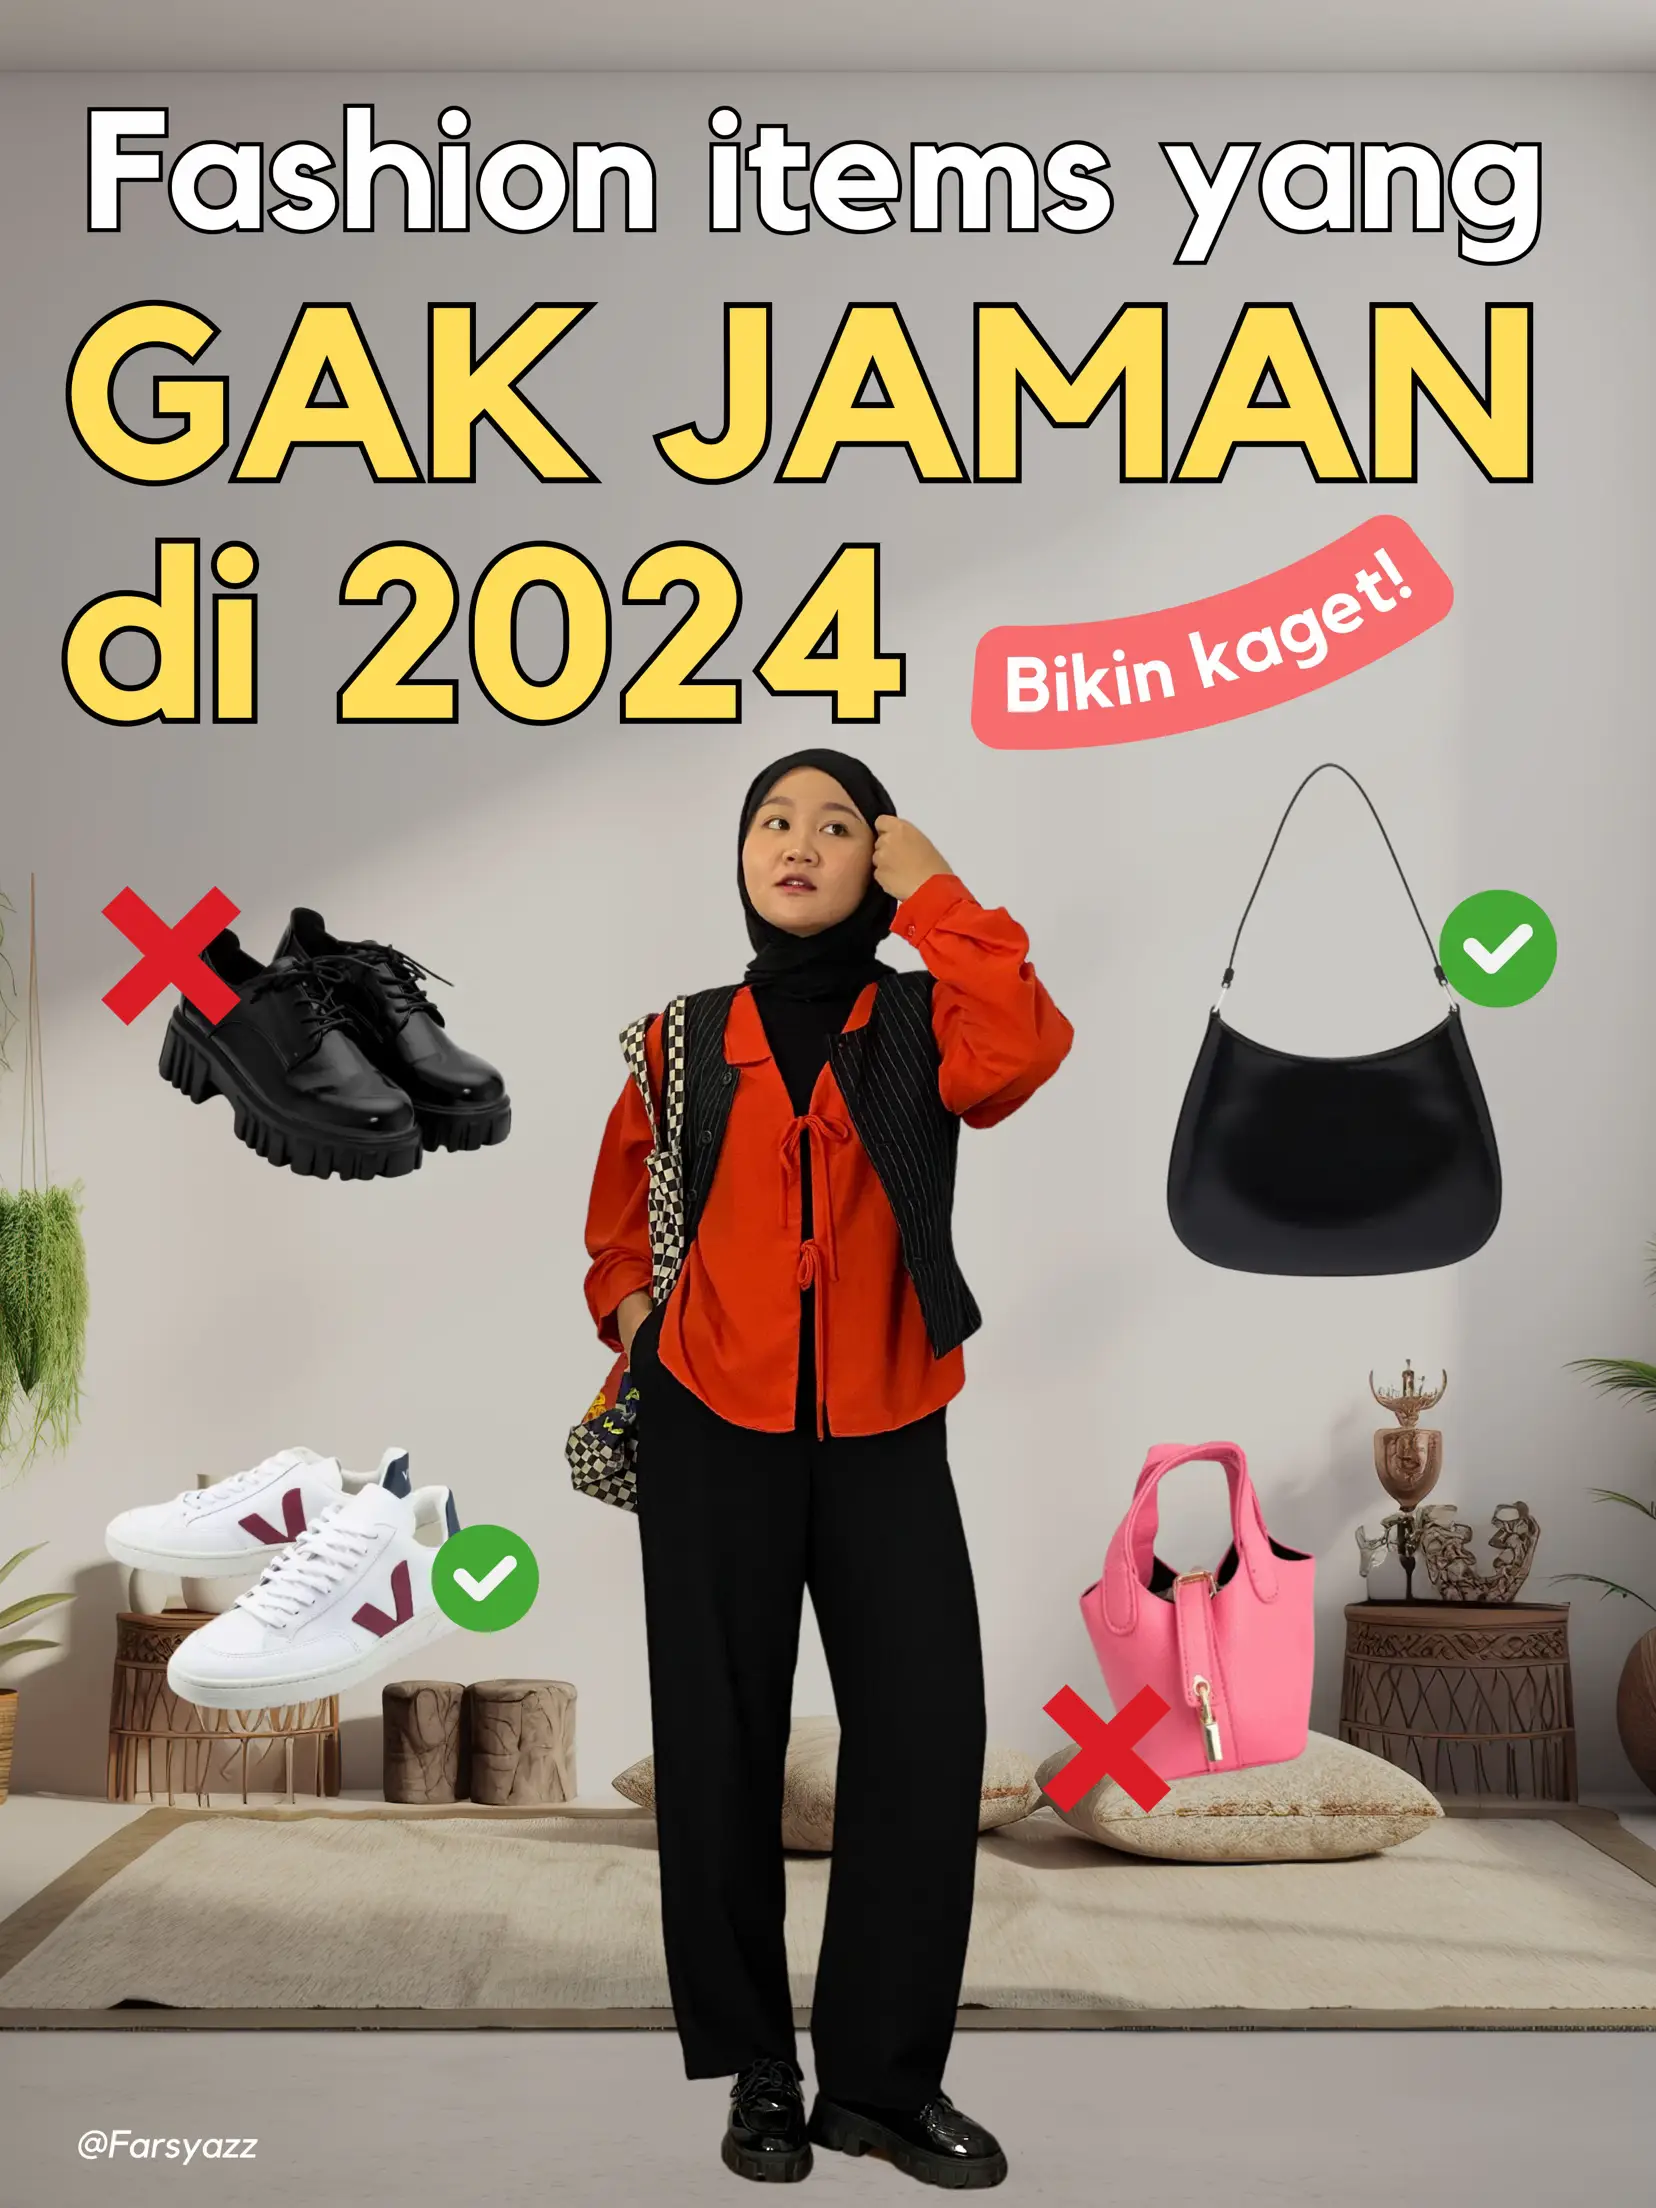 Tinggalin fashion items ini di 2024. GAK JAMAN!!'s images